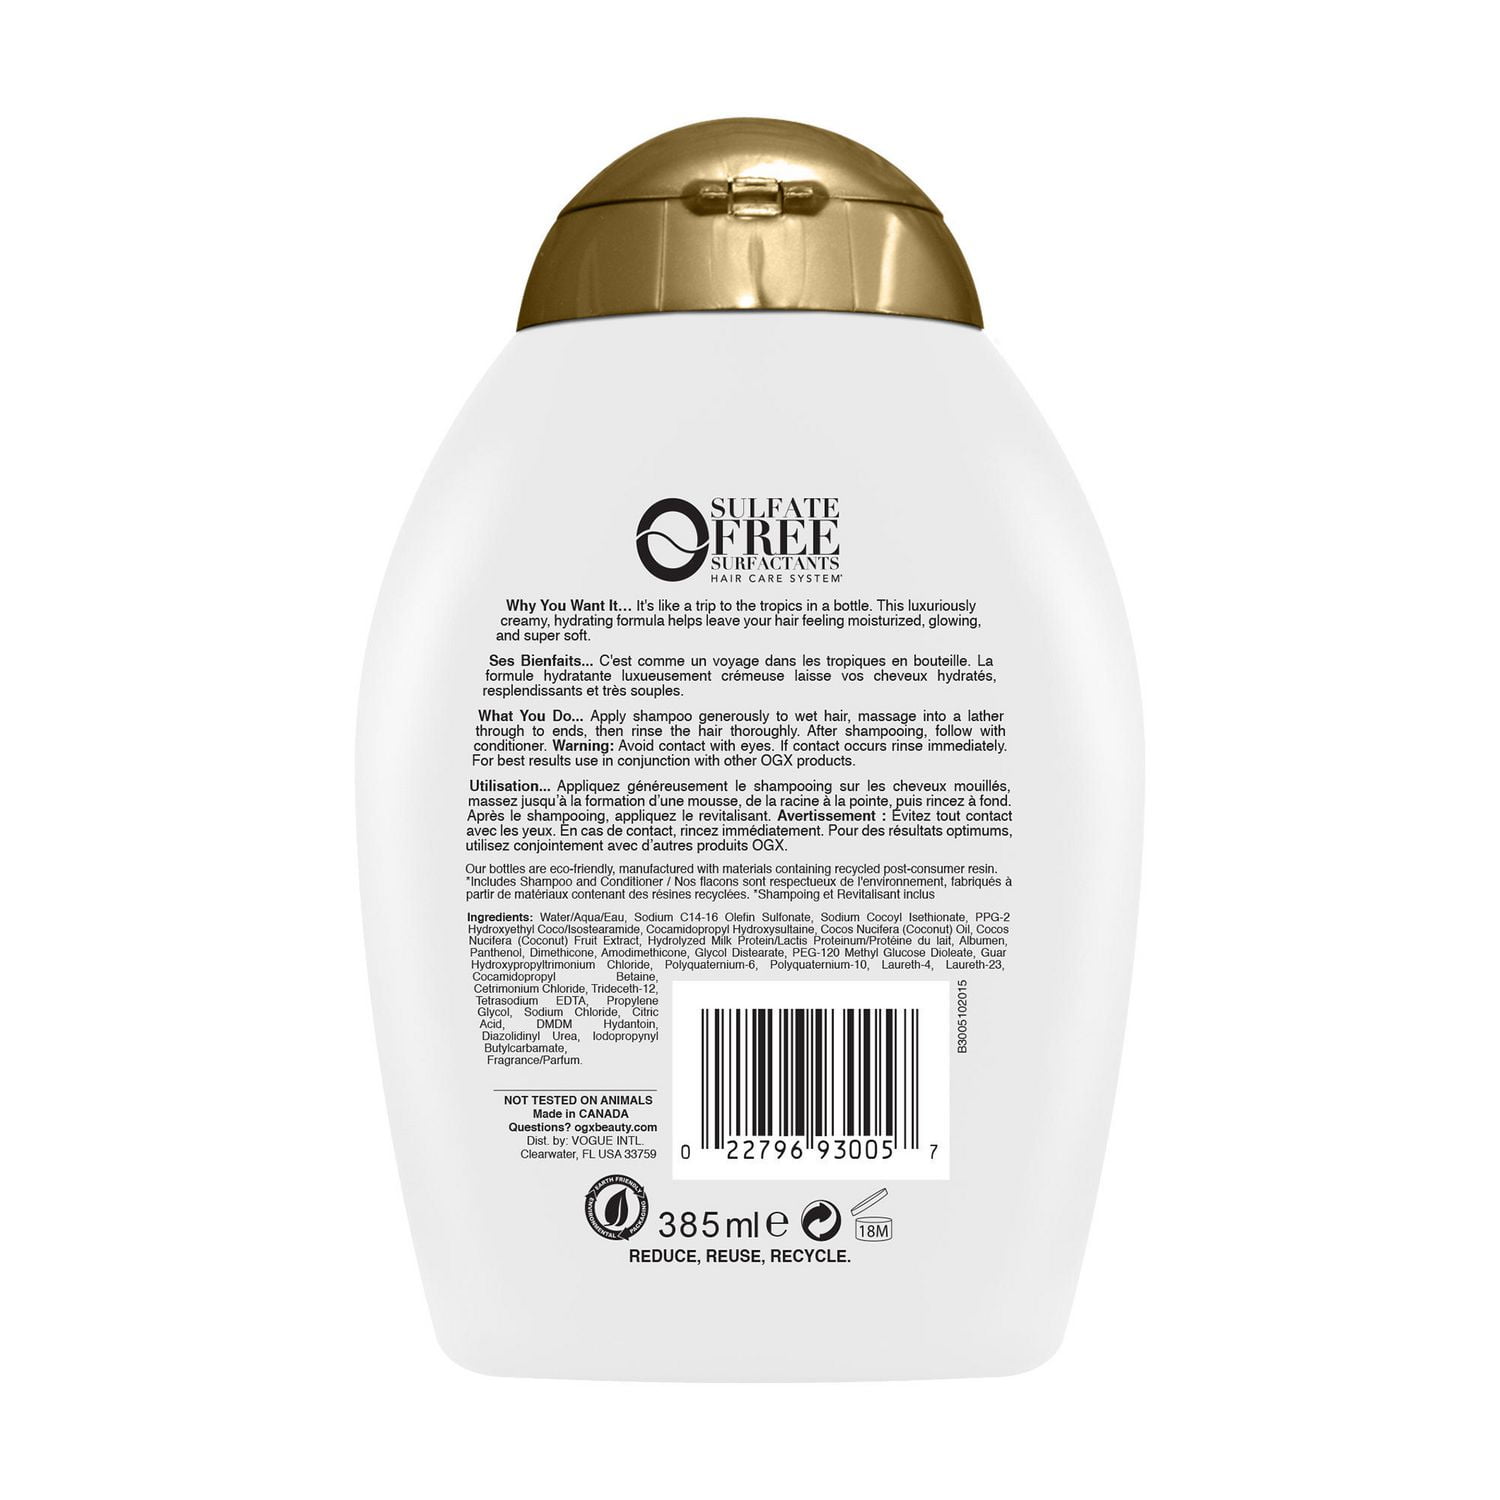 OGX Nourishing + Coconut Milk Shampoo, 385mL 